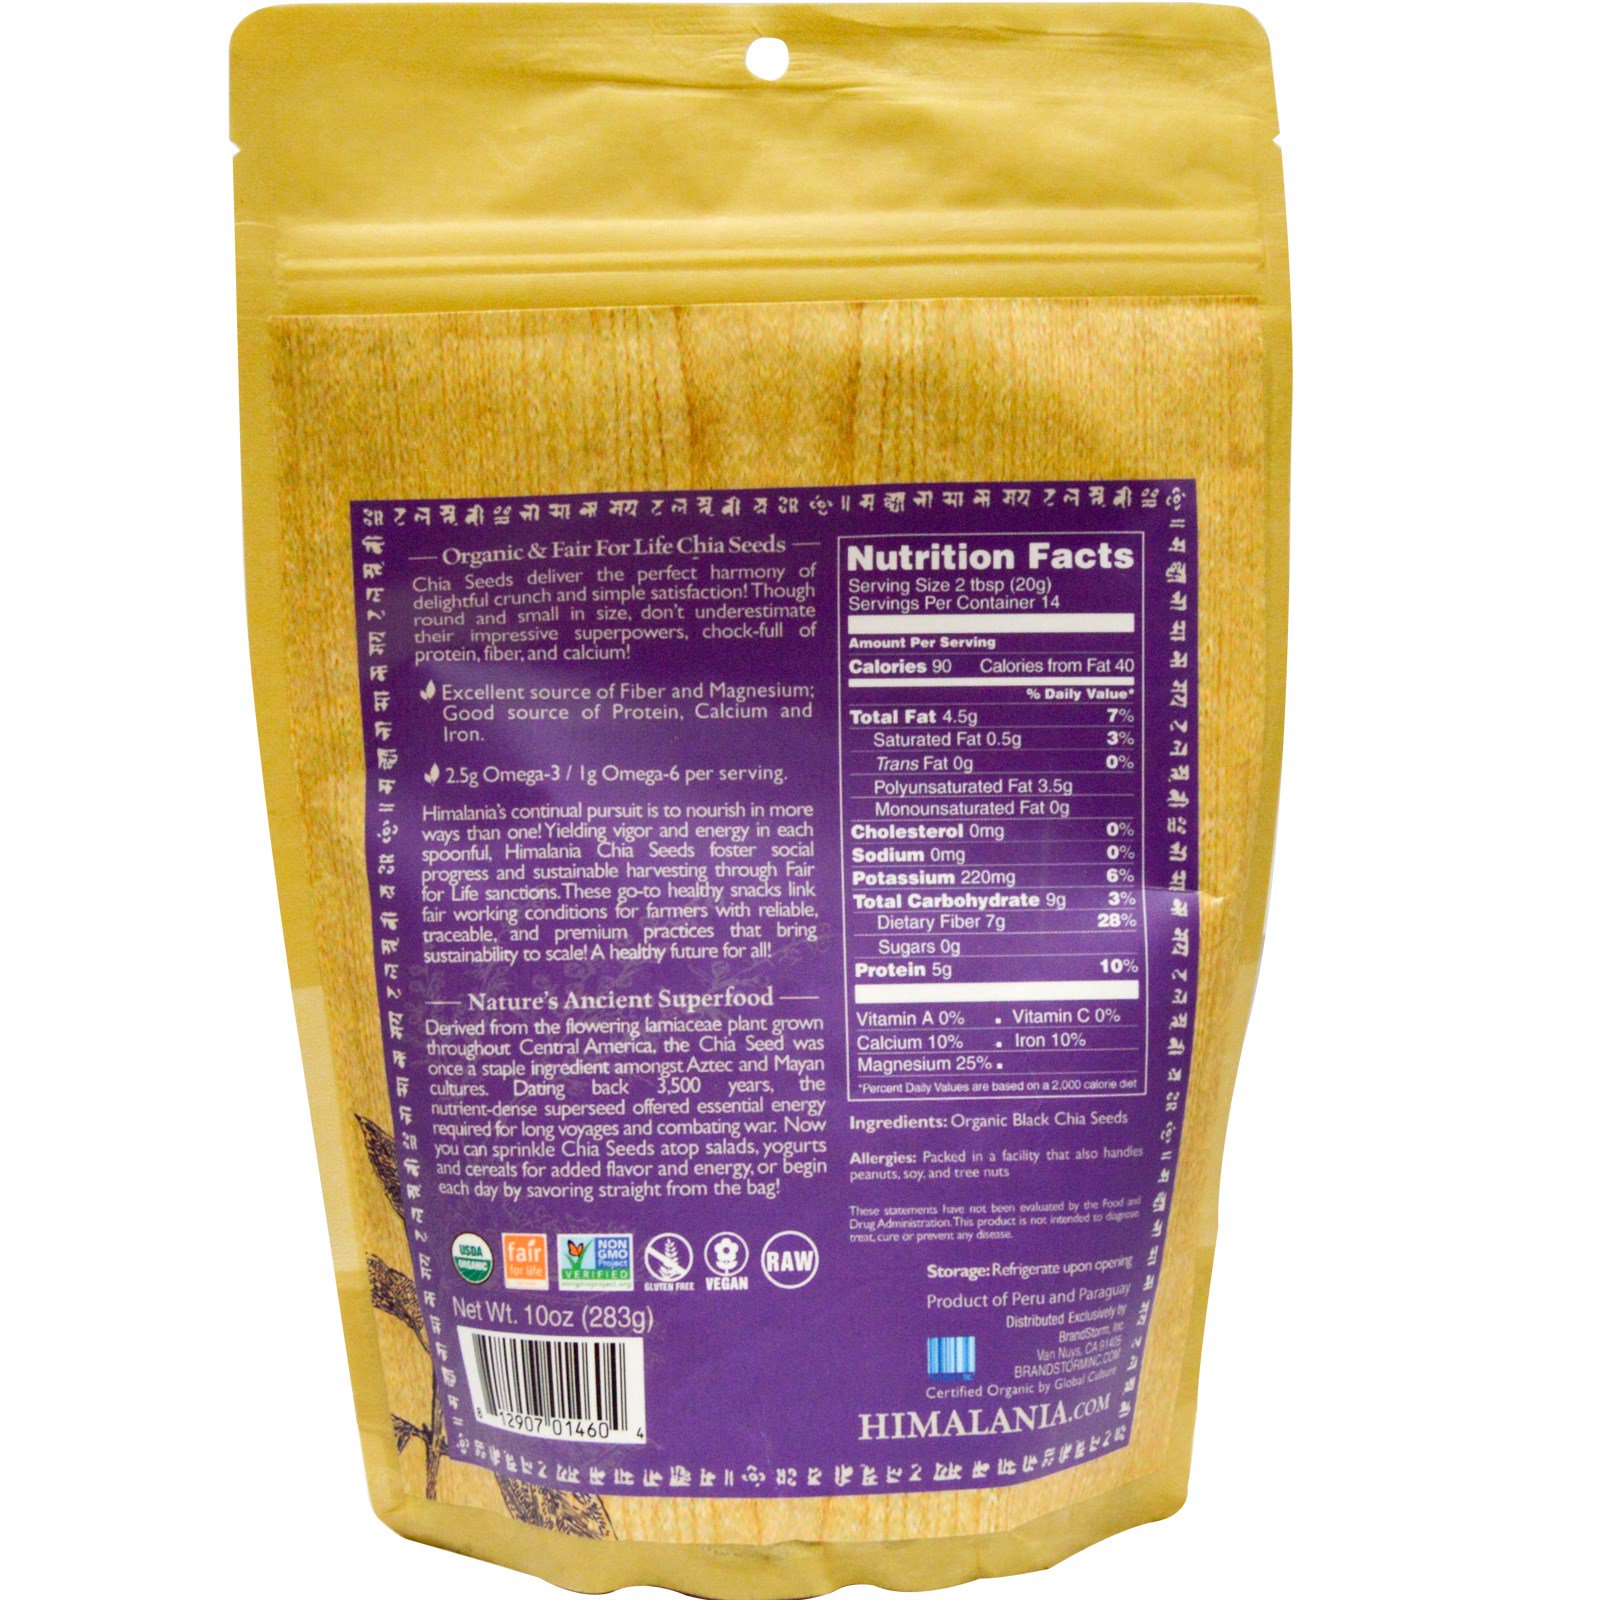 Himalania, Organic & Fair Trade Black Chia Seeds, 10 oz ...